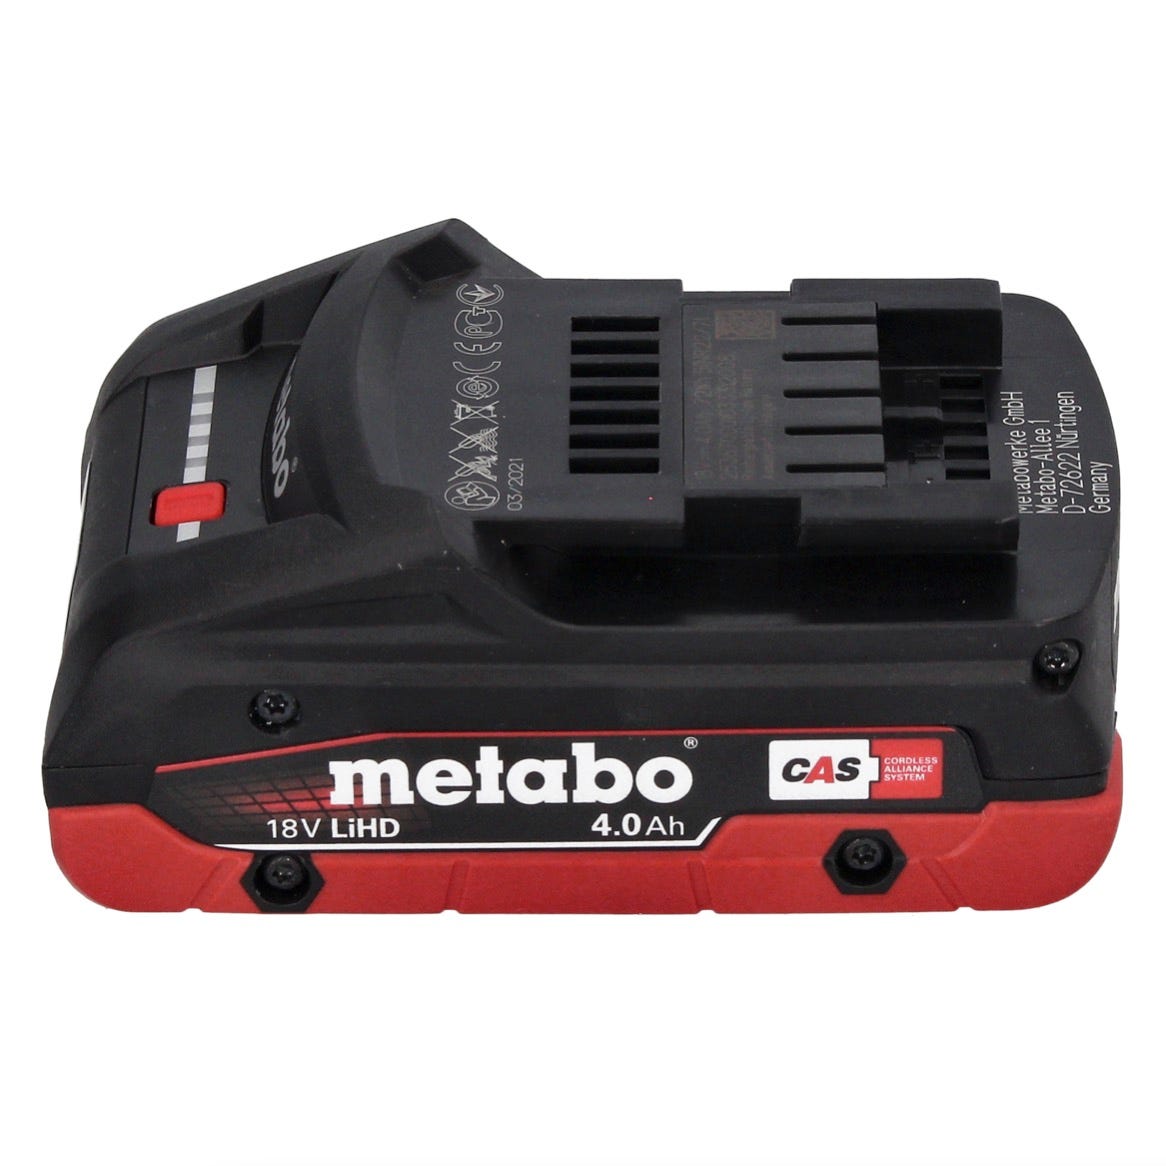 Metabo W 18 L BL 9-125 Meuleuse d'angle sans fil 18 V 125 mm Brushless + 1x batterie 4,0 Ah + metaBOX - sans chargeur 3